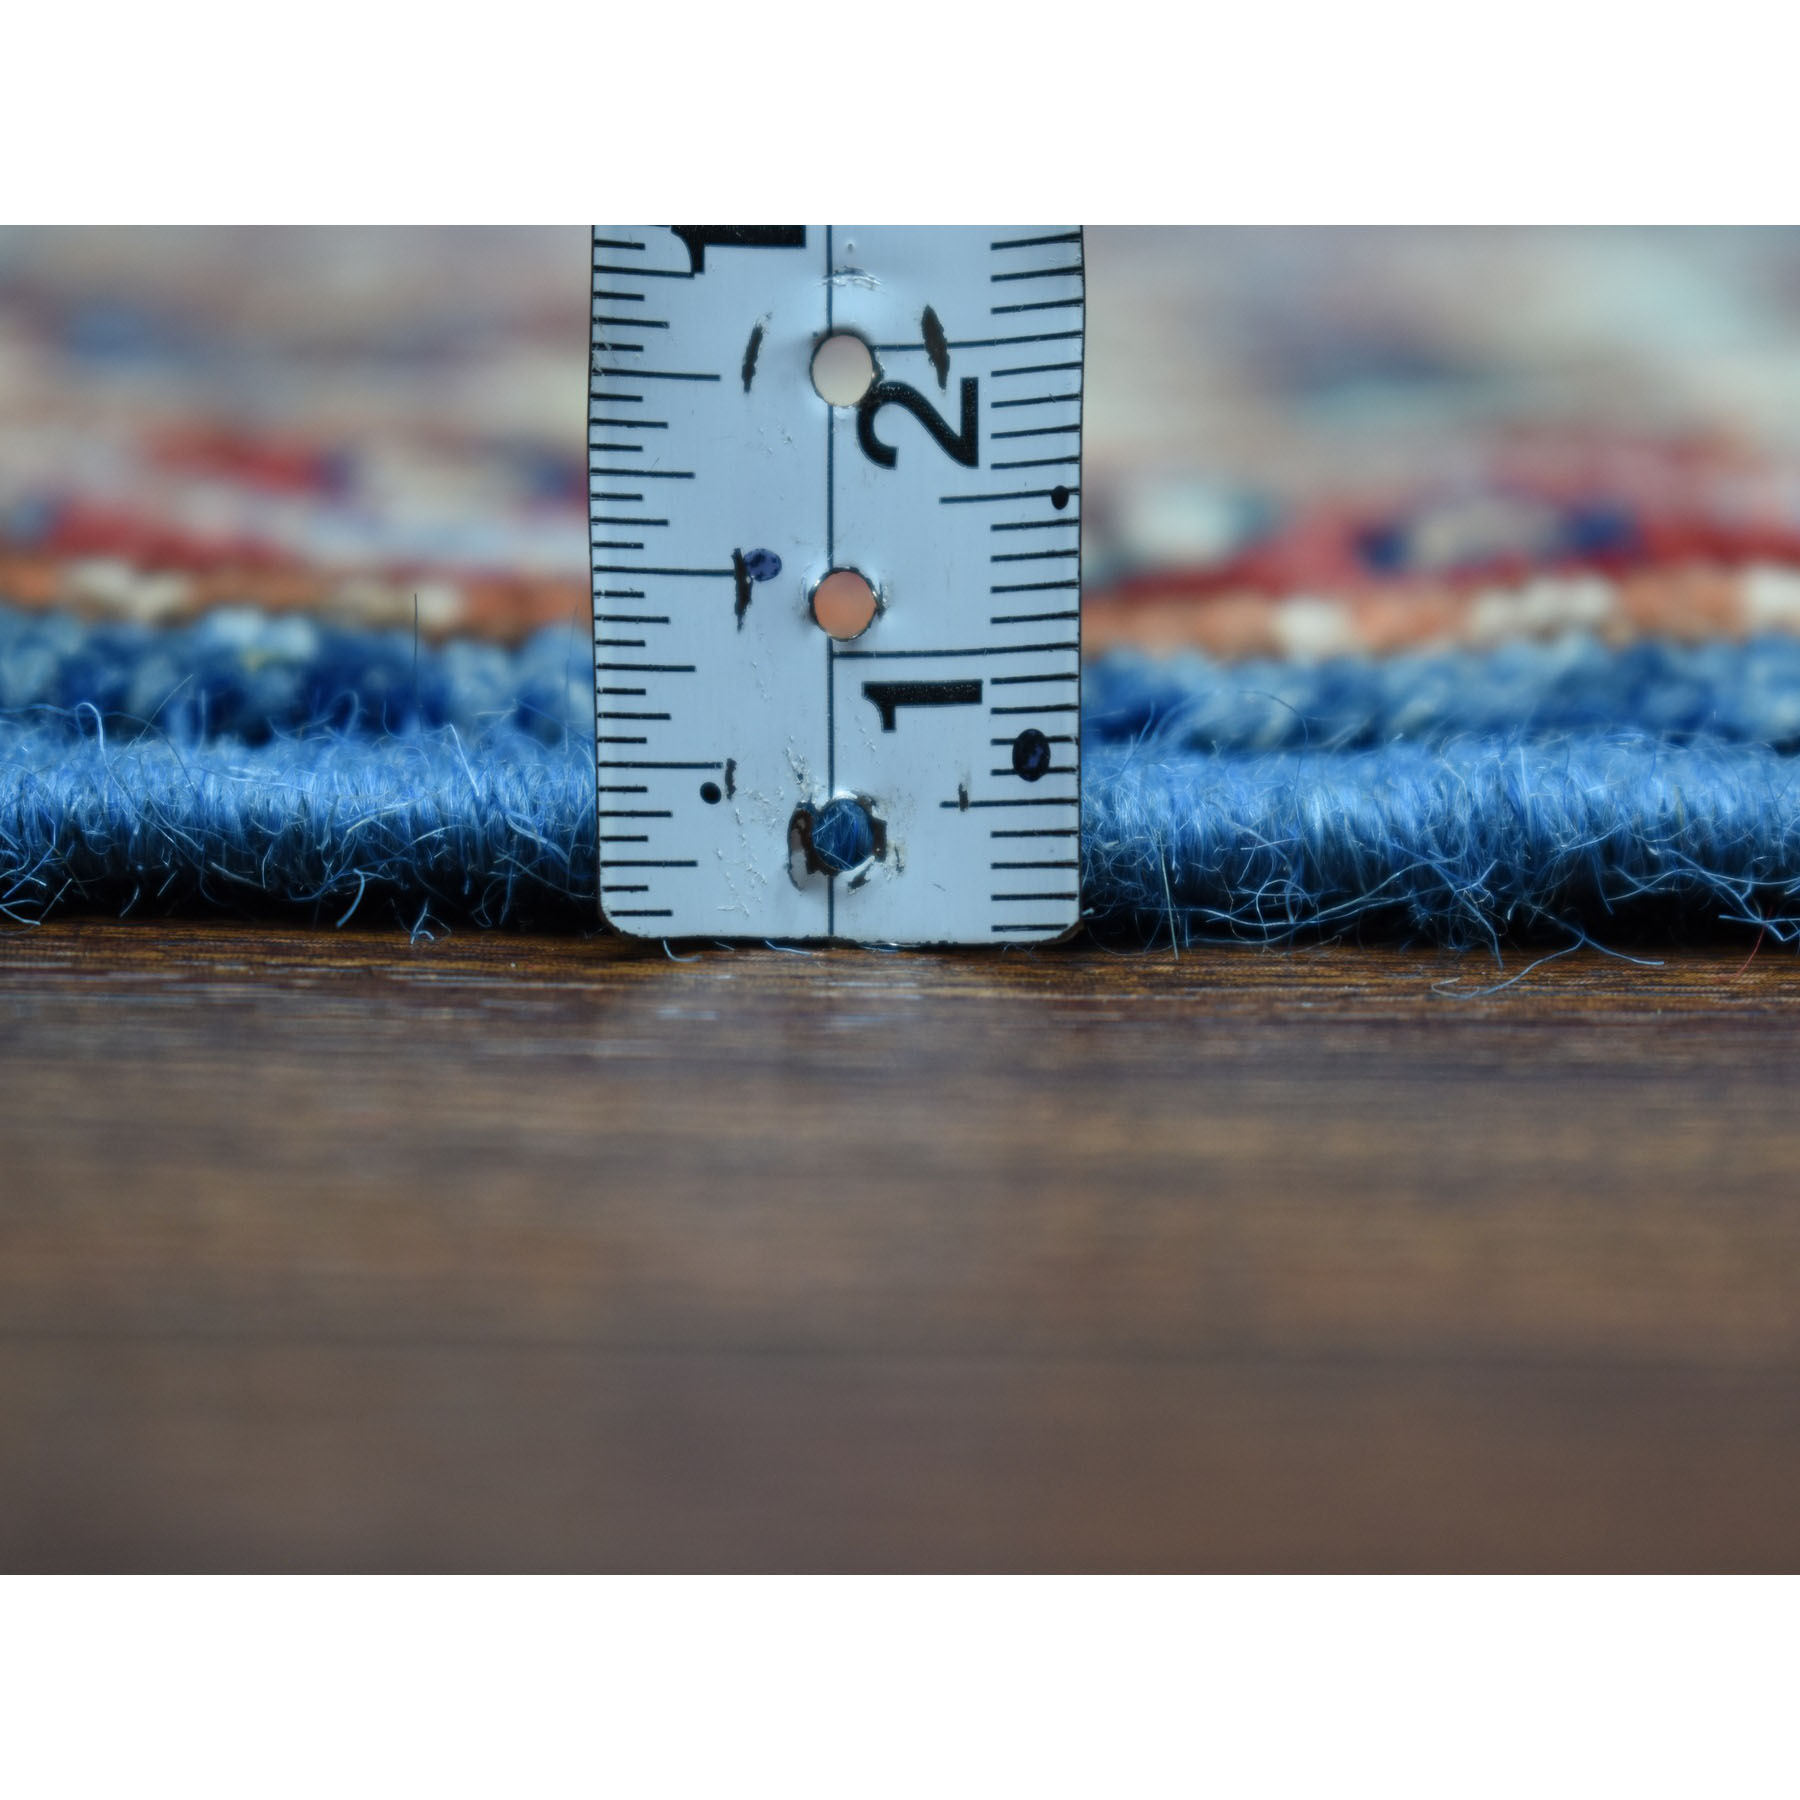 3-3 x4-8  Blue Super Kazak Geometric Design Pure Wool Hand-Knotted Oriental Rug 